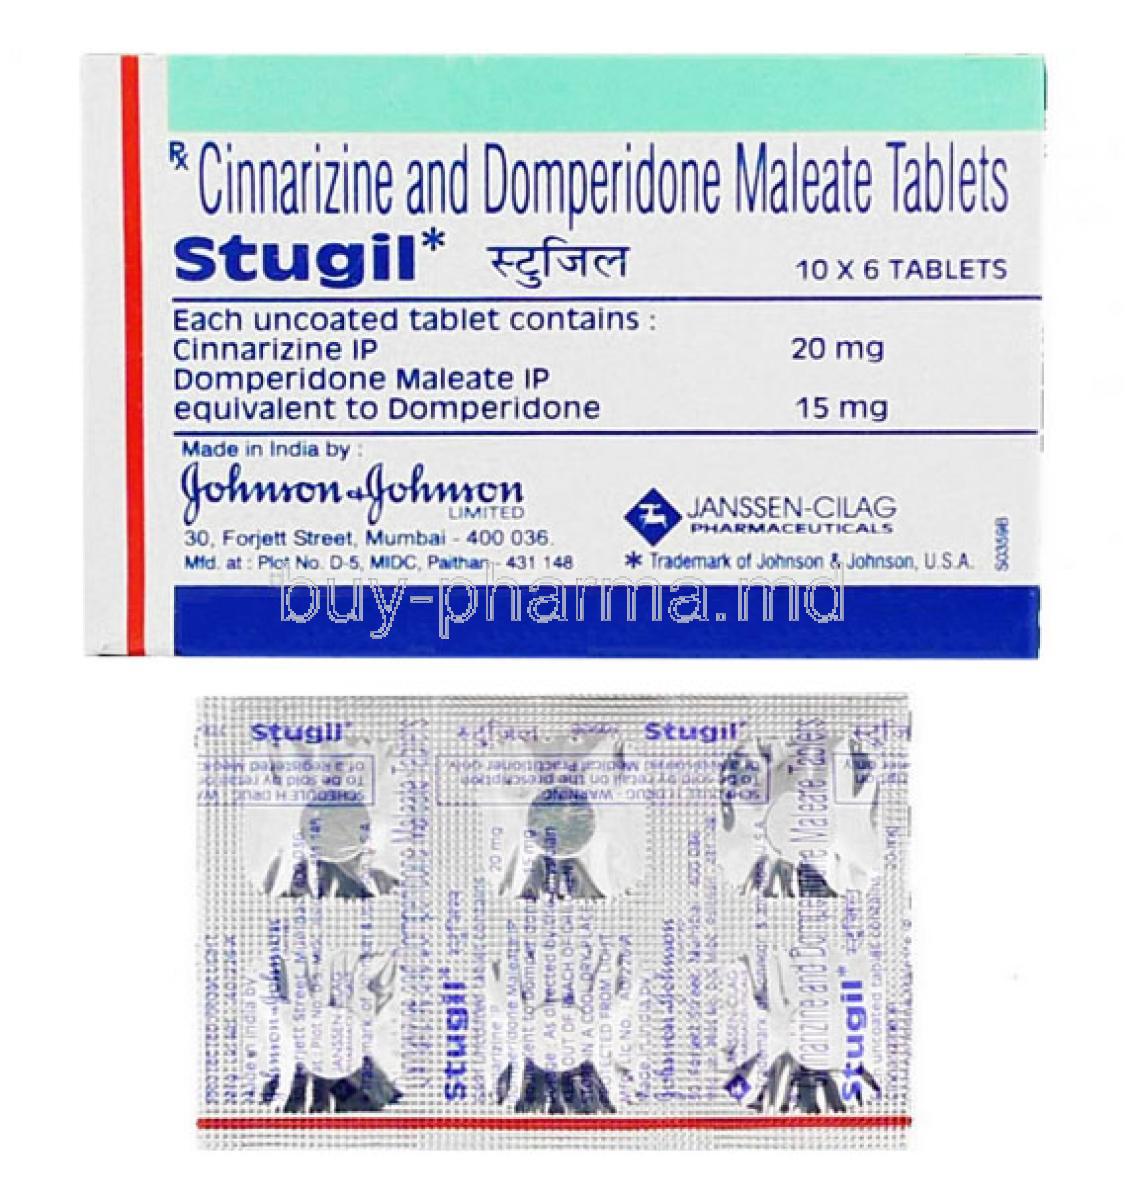 Stugil, Cinnarizine and Domperidone box and tablets